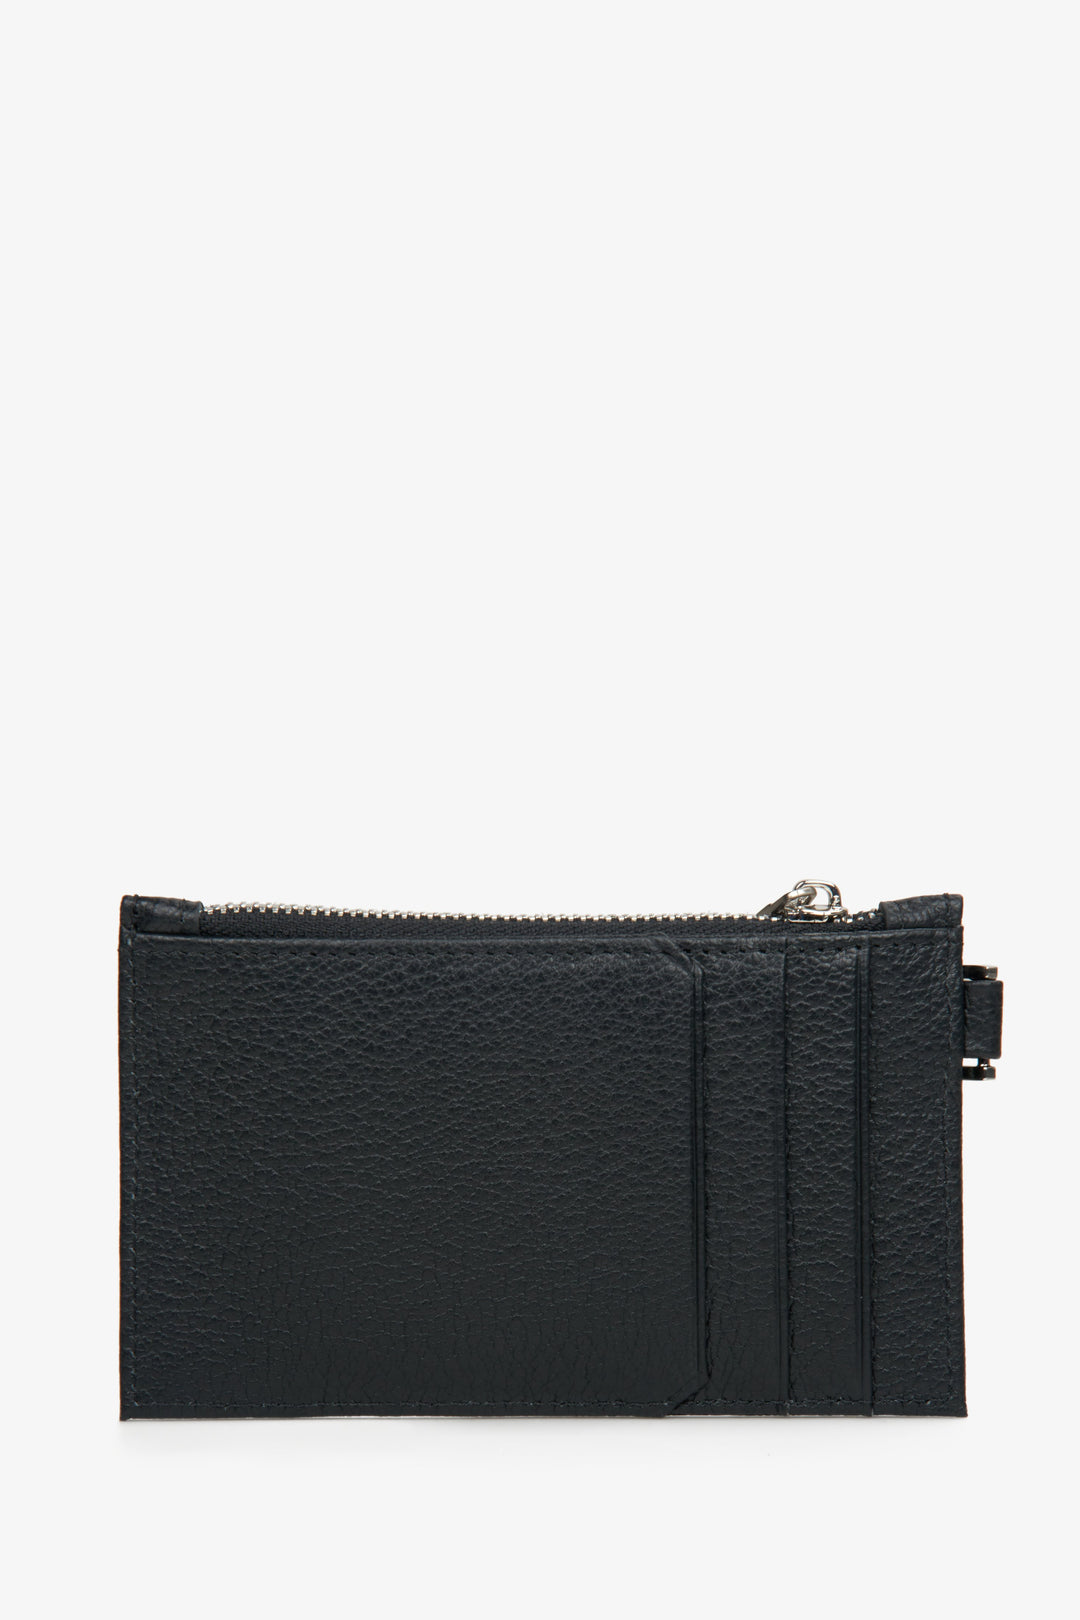 Men's black leather pouch-style wallet.